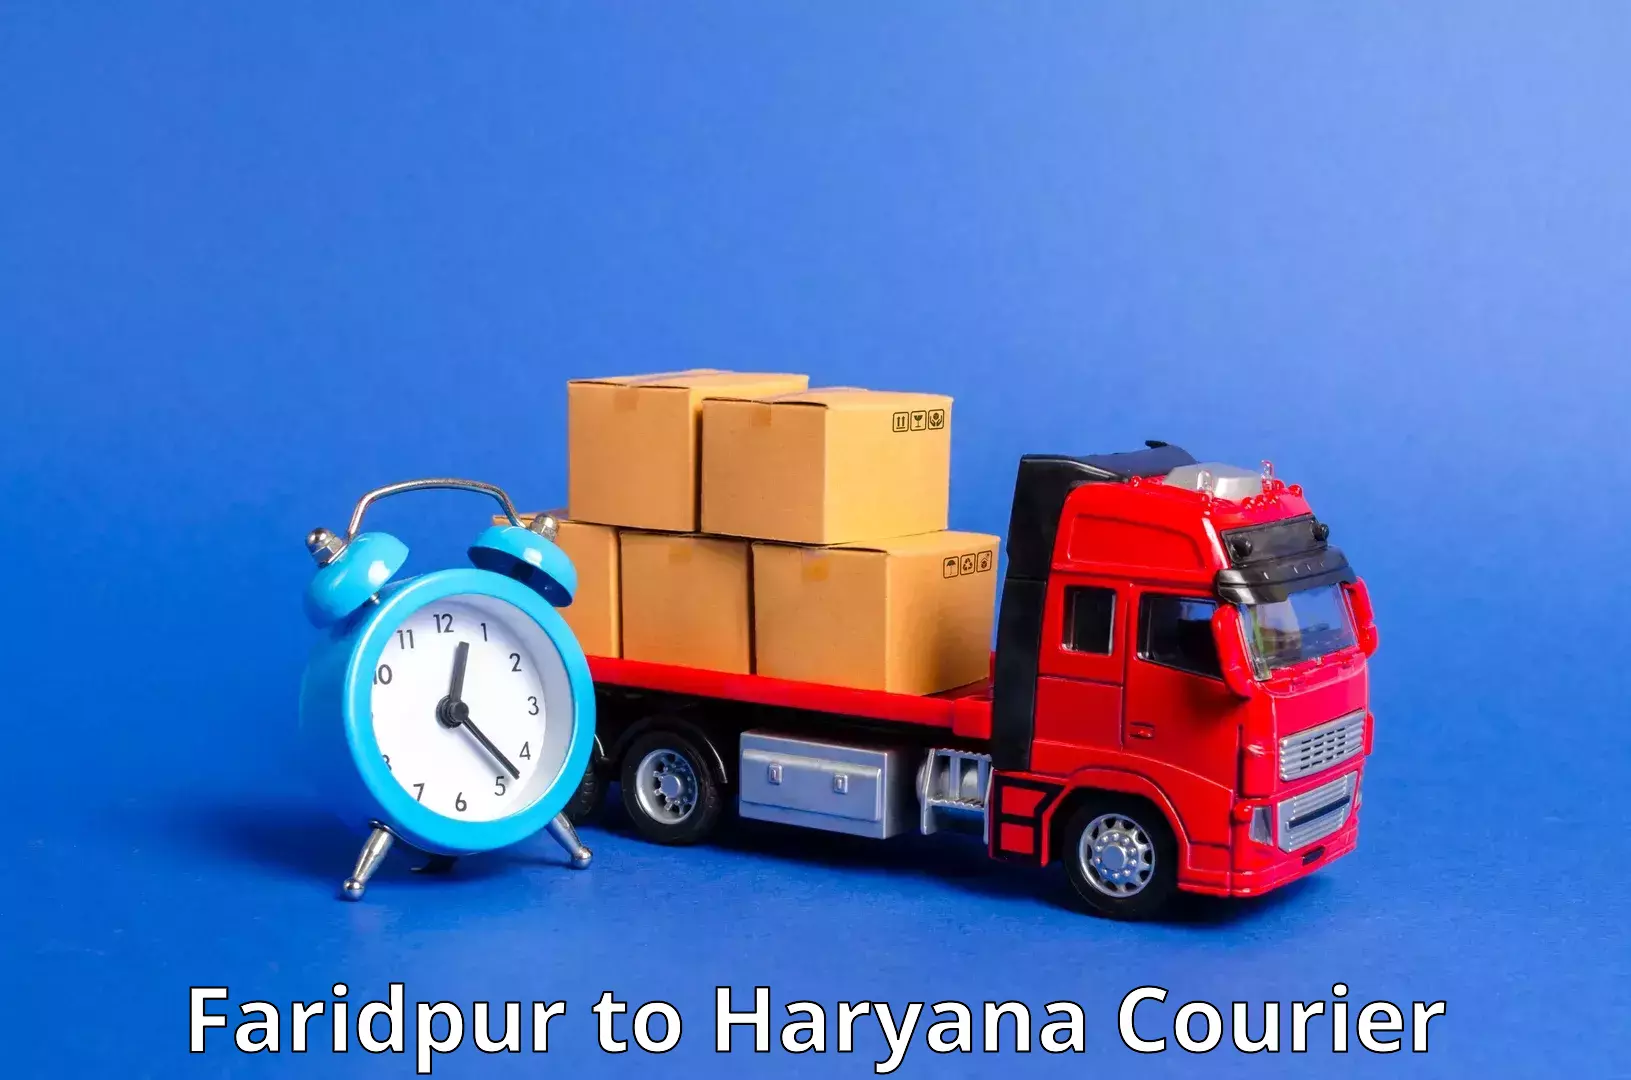 Courier service innovation Faridpur to Kurukshetra University